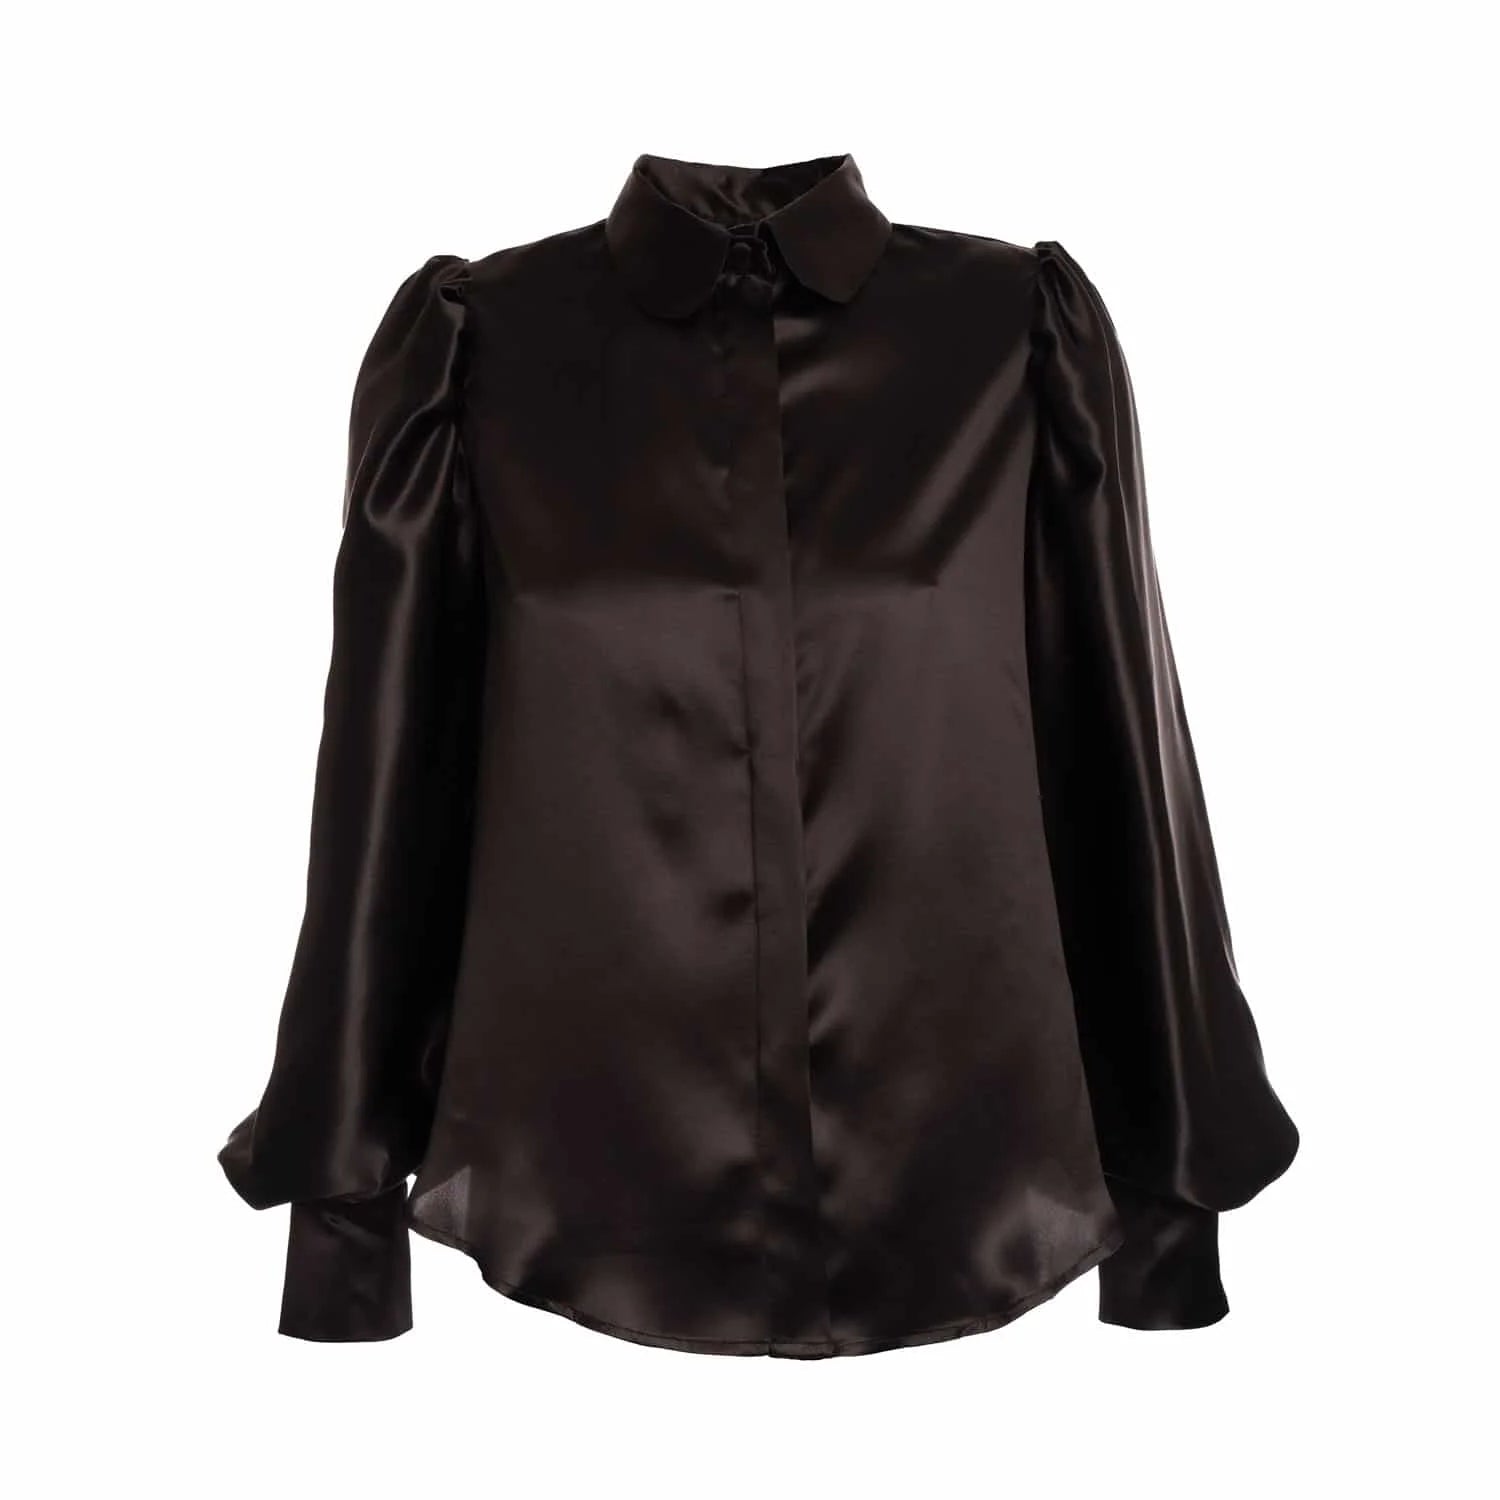 Black silk blouse - Blouse